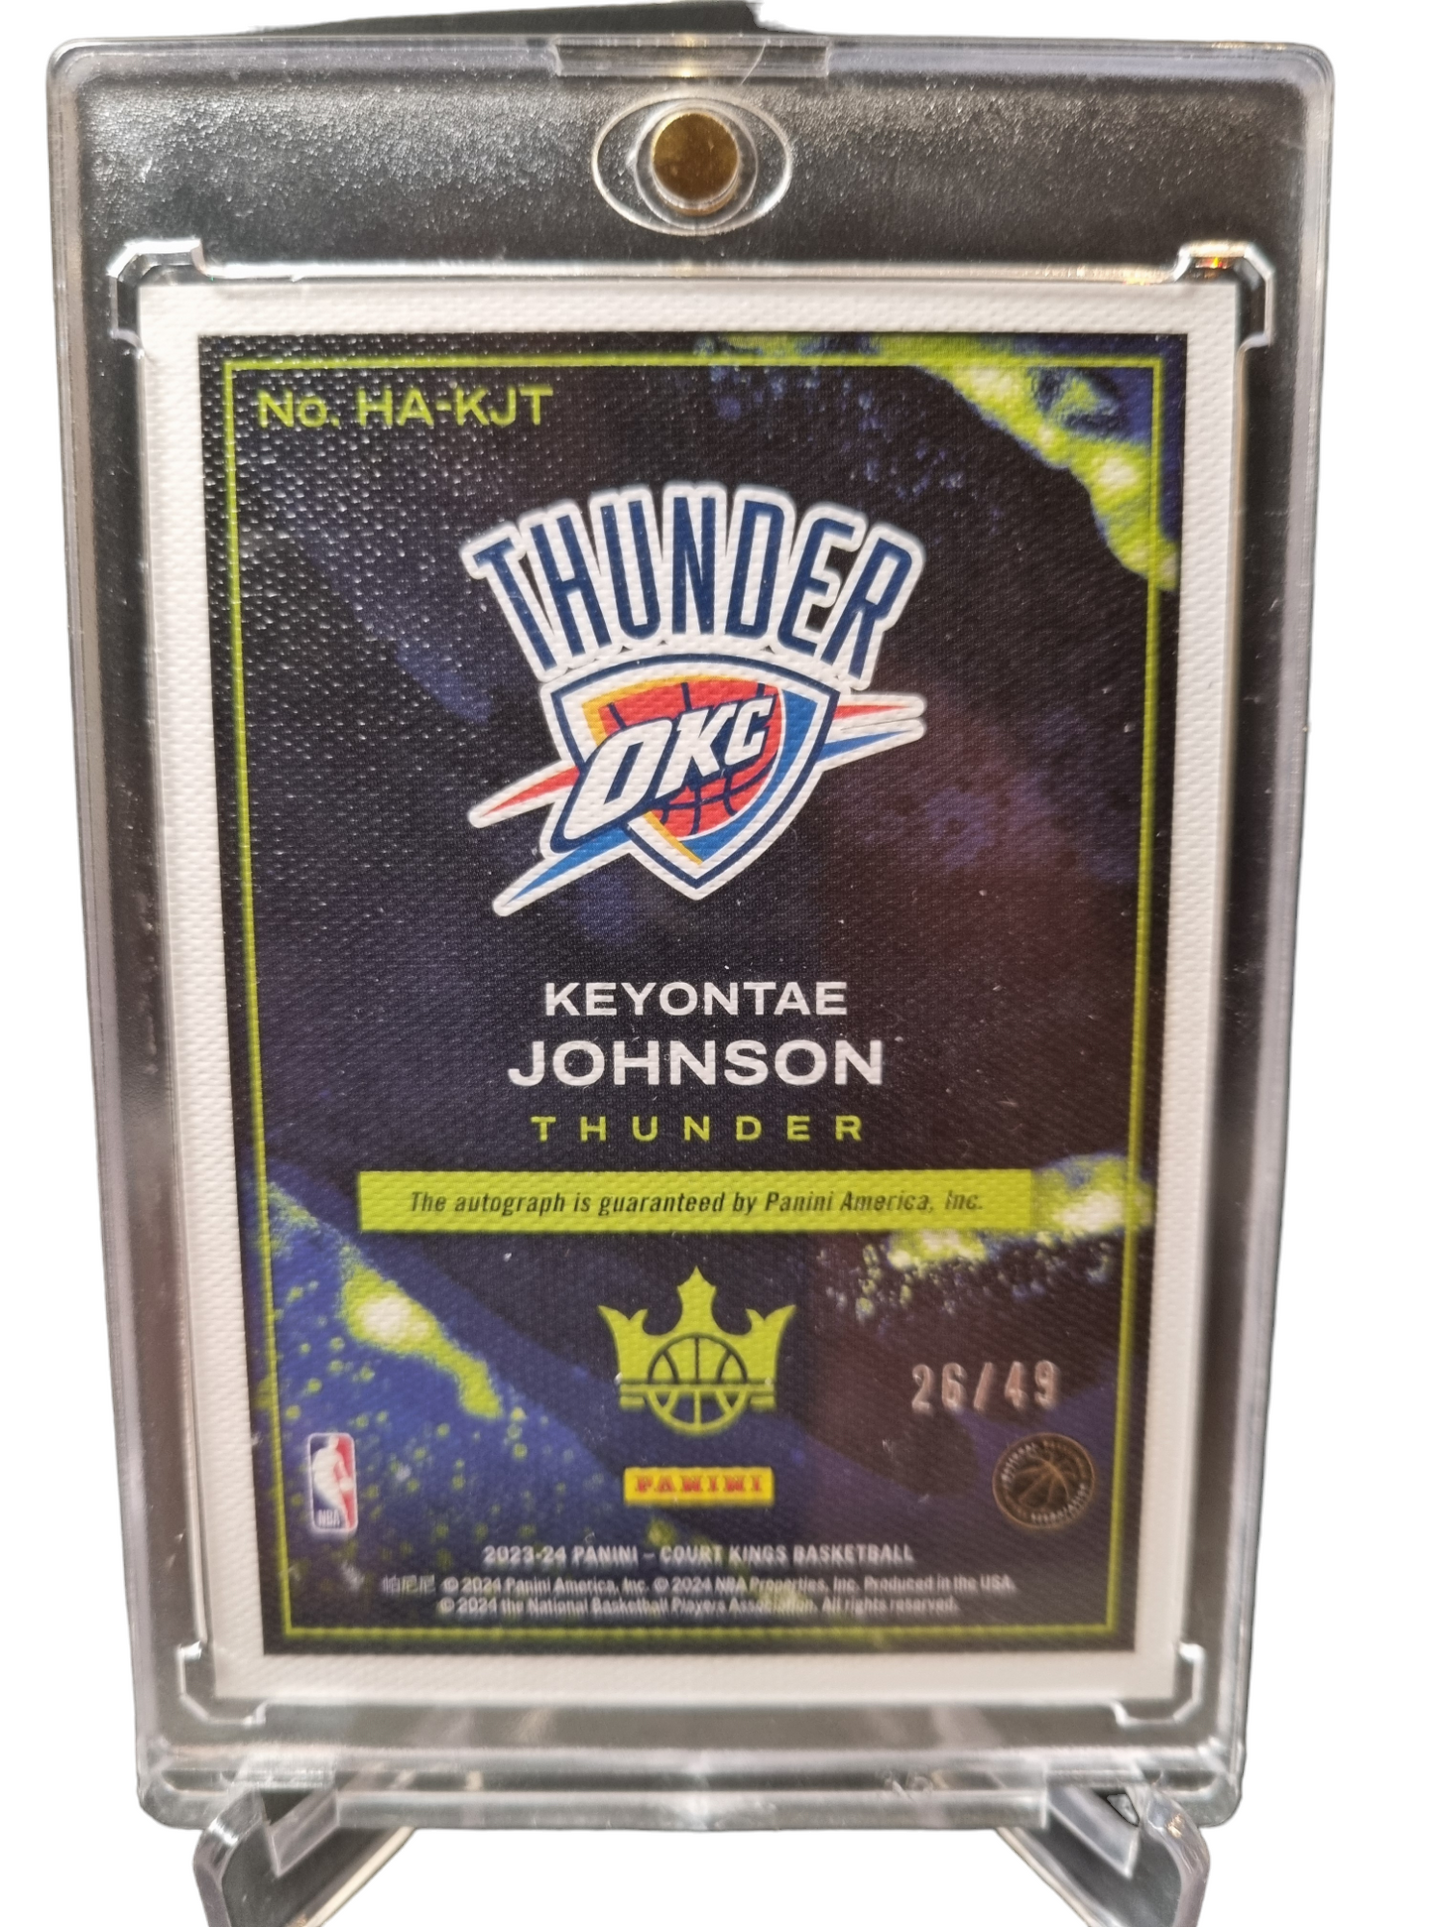 2023-24 Panini Court Kings #HA-KJT Keyonte Johnson Rookie Card Heir Apparent Autograph 26/49